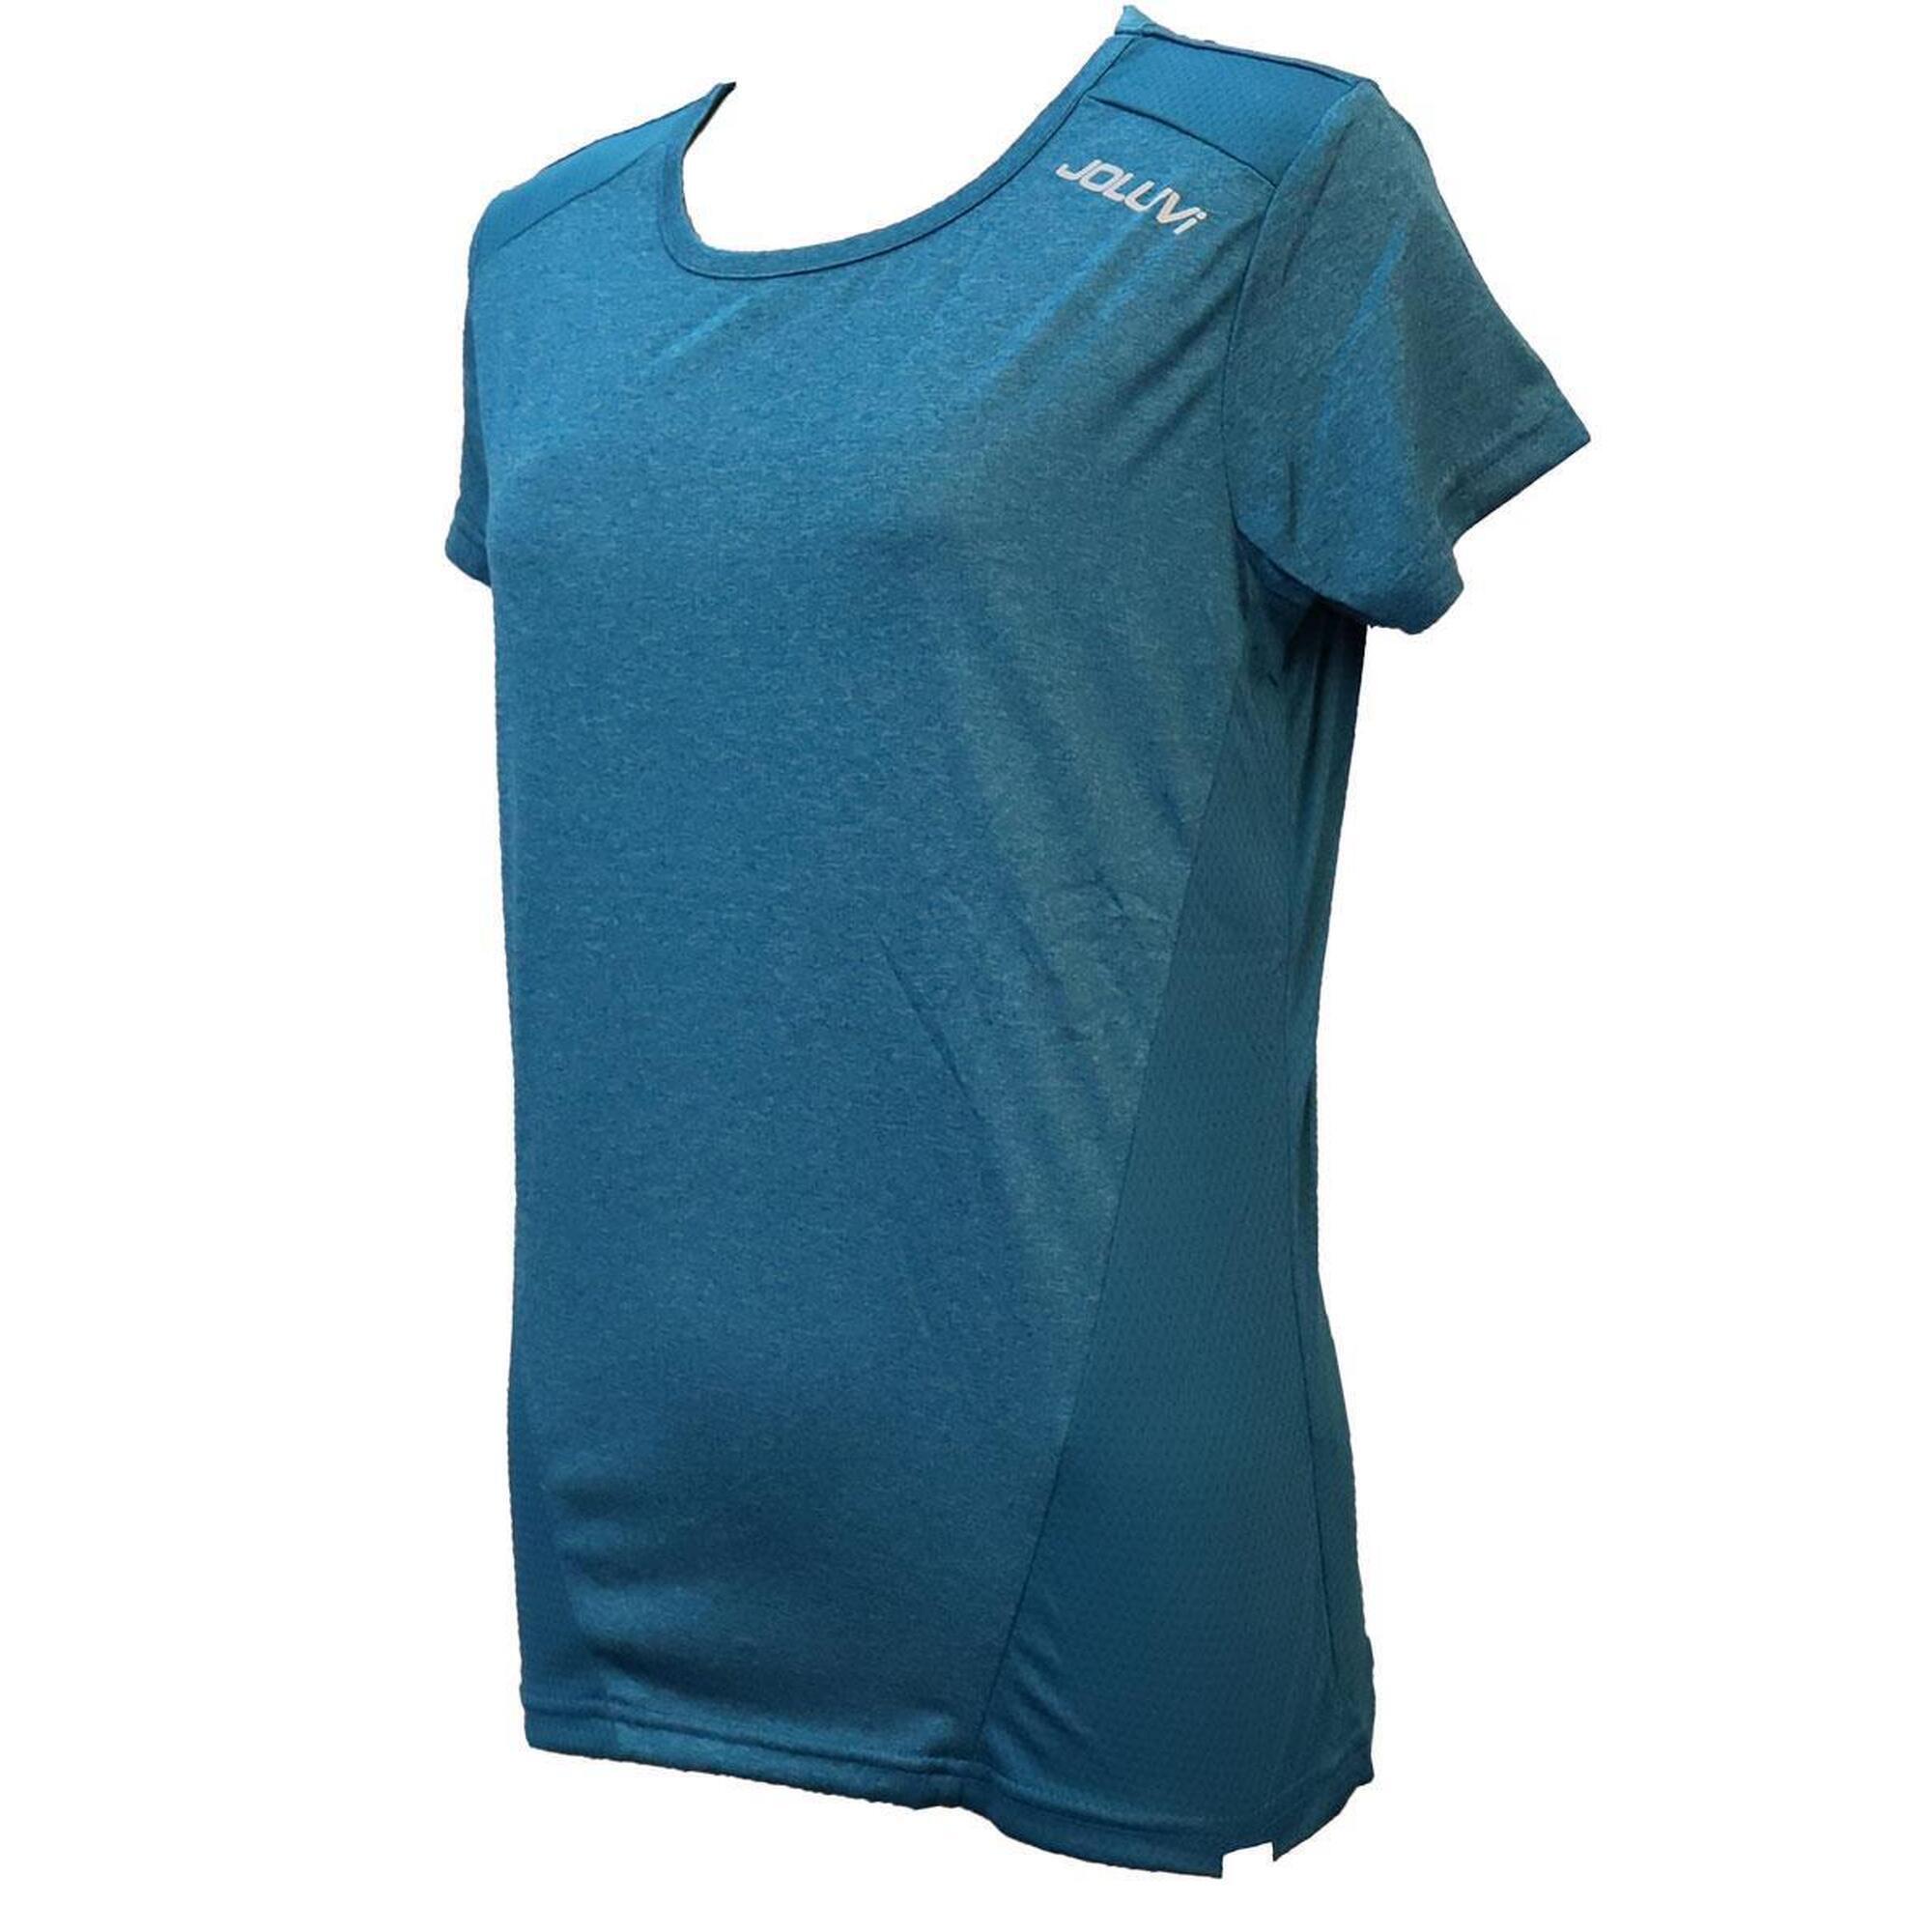 Joluvi Women's Spitt T-Shirt - Turquoise 1/2